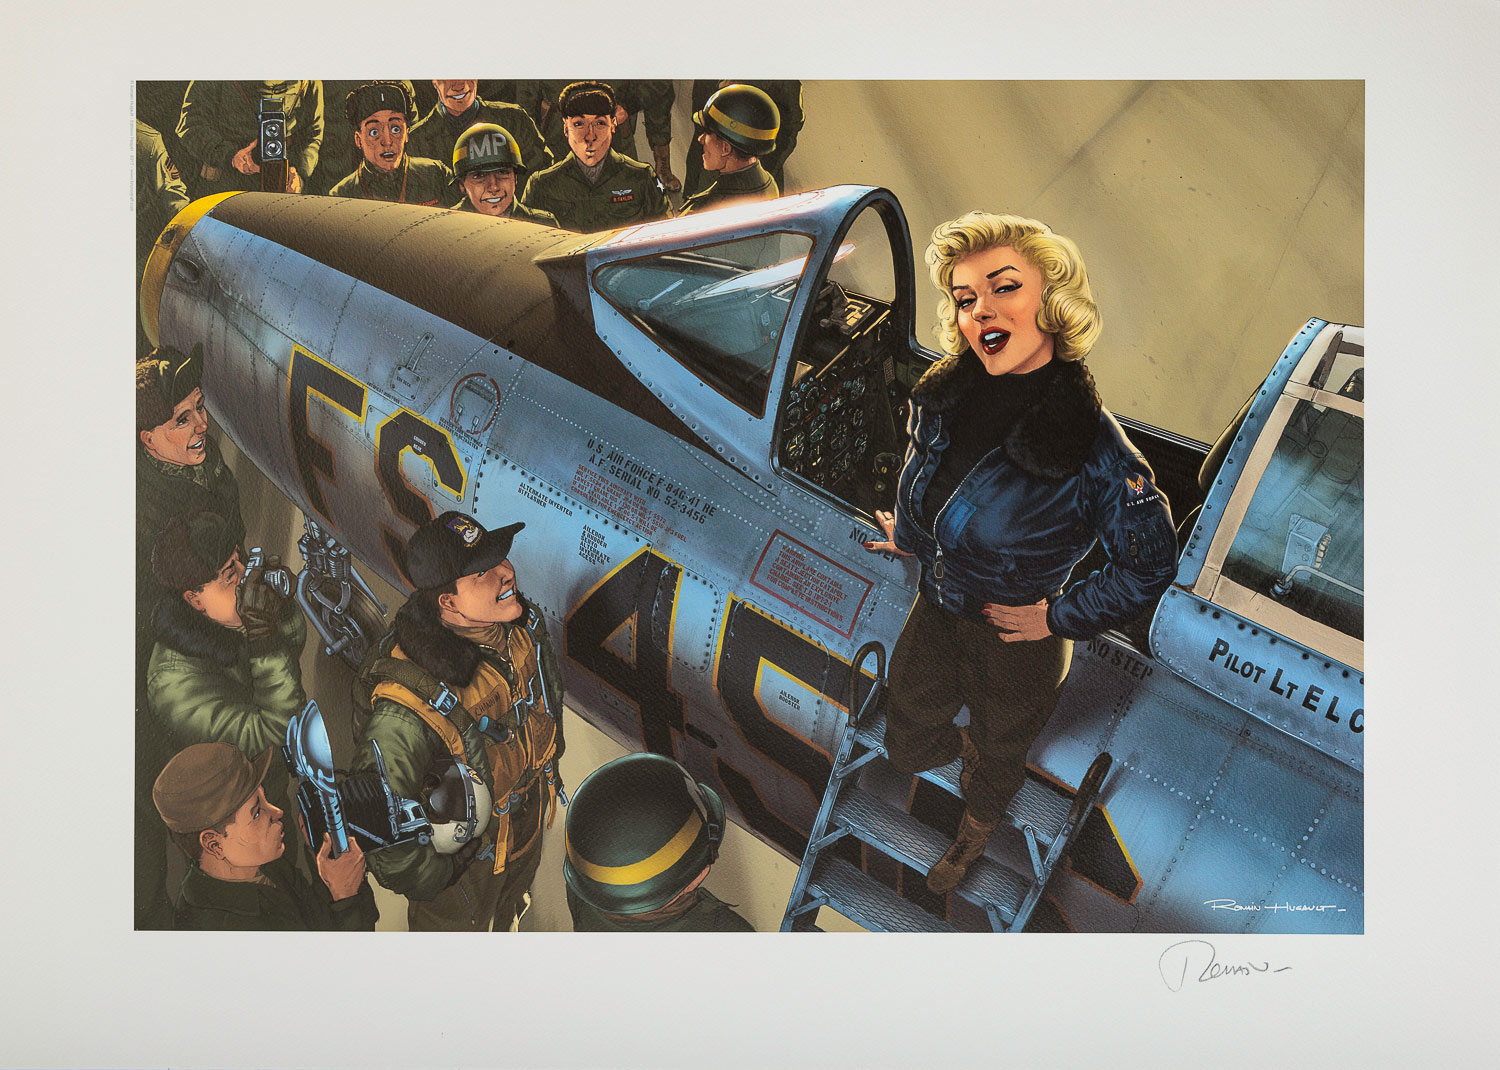 Stampa firmata Romain Hugault : Marilyn, North American F-100 Super Sabre